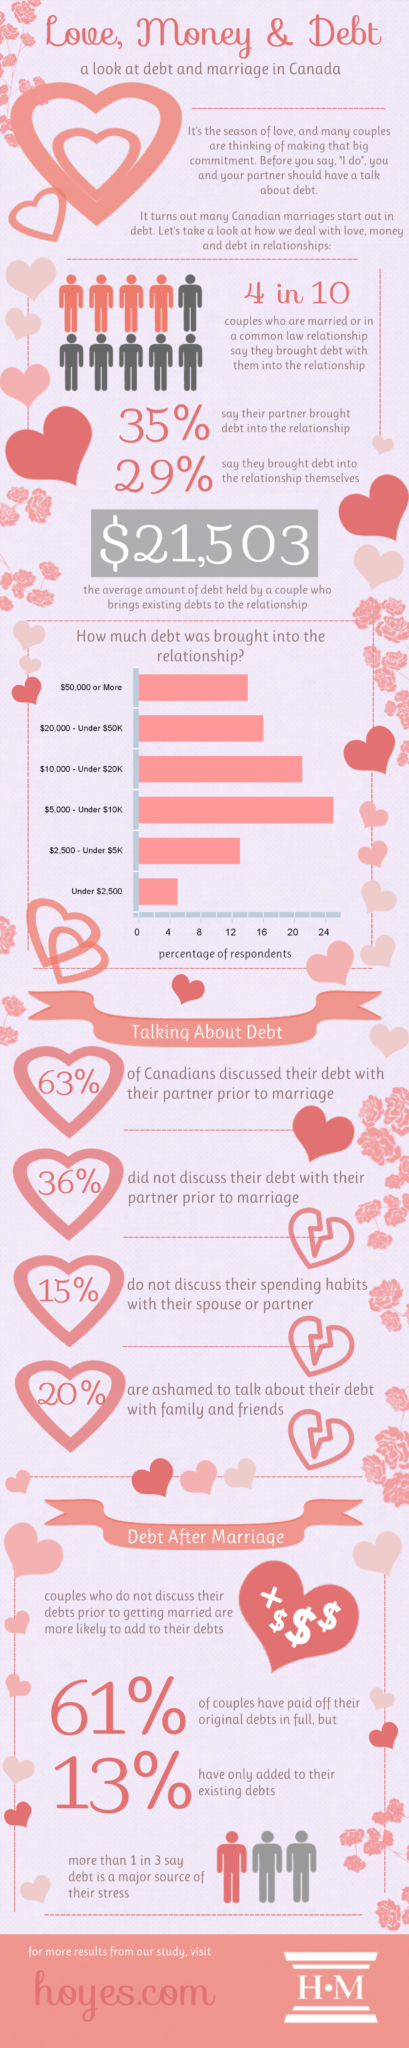 Love, Money & Debt infographic